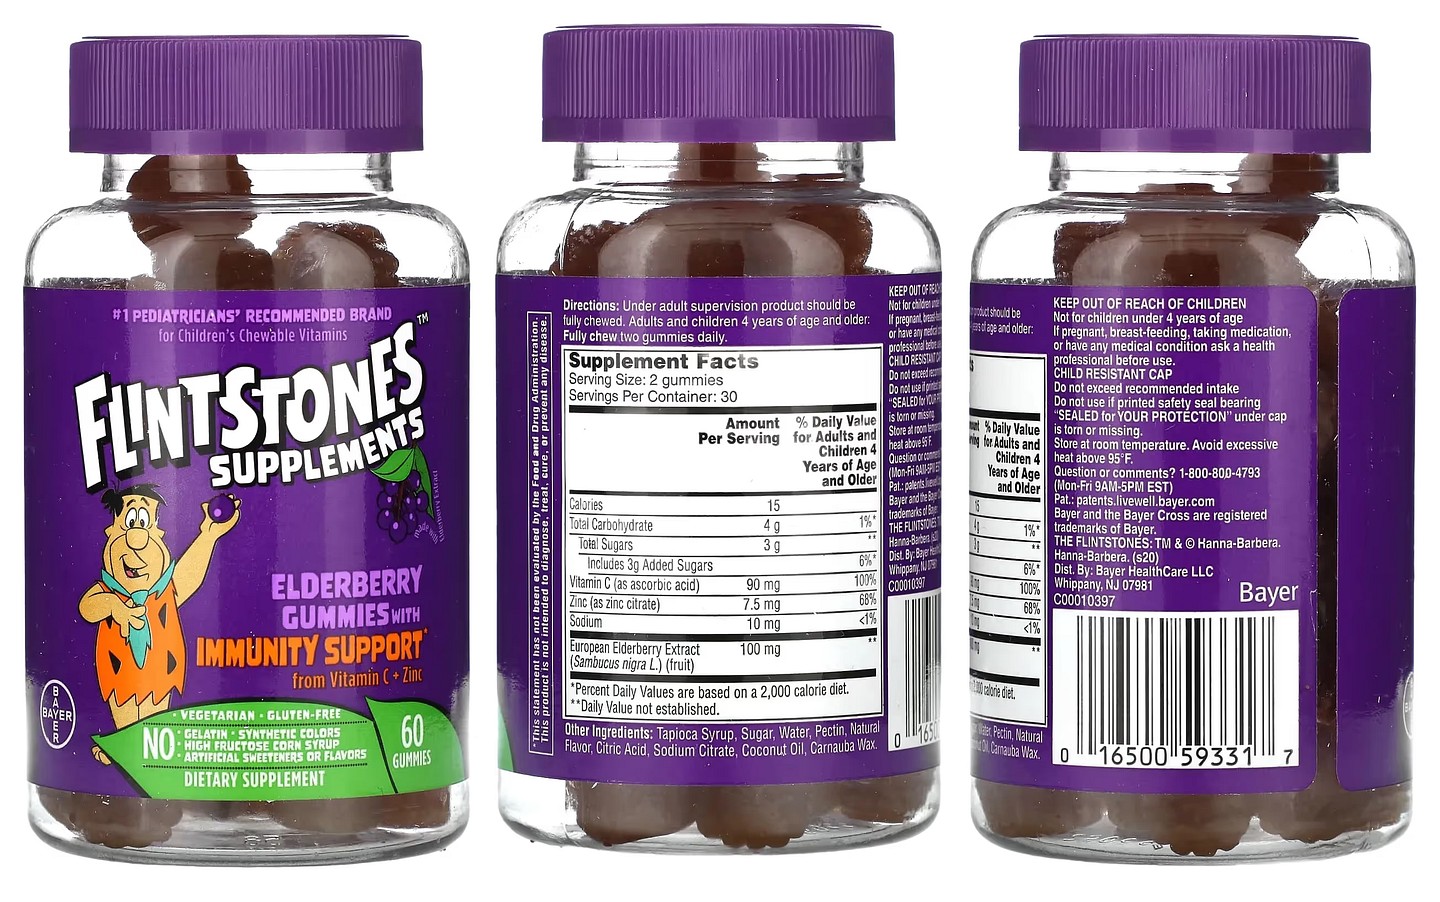 Flintstones, Elderberry Gummies with Immunity Support packaging